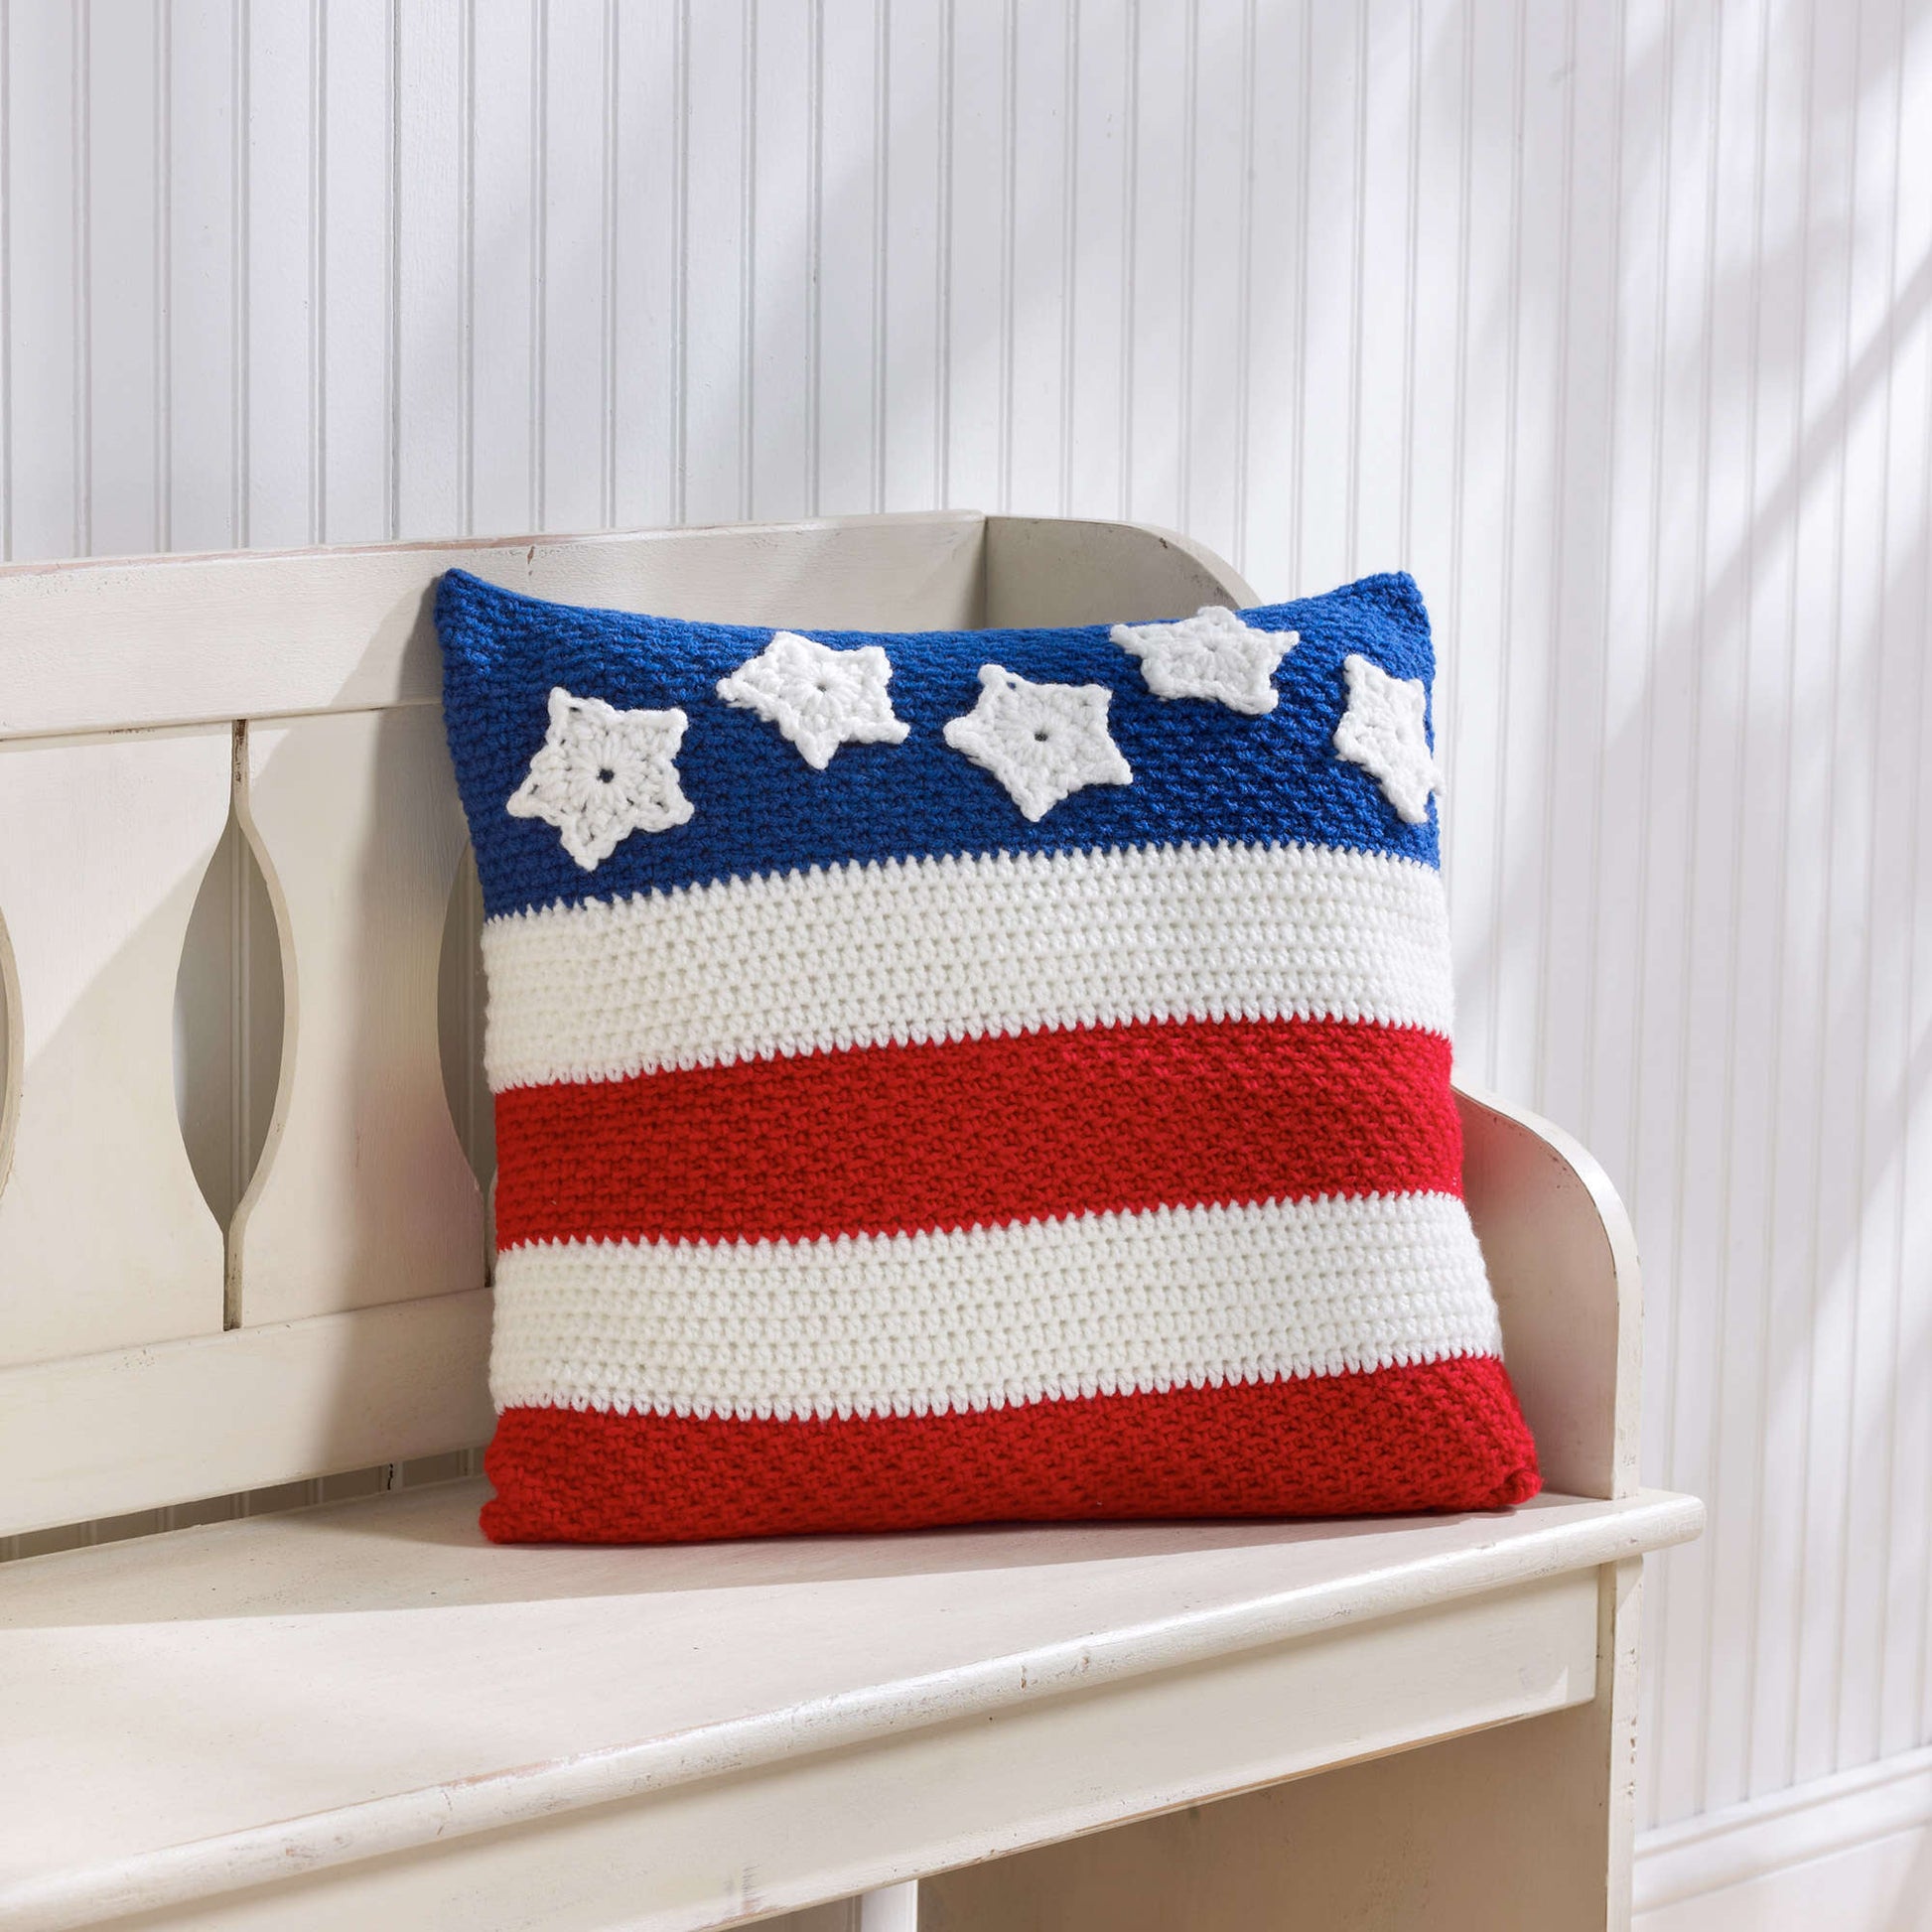 Free Red Heart Crochet Patriotic Pillow Pattern